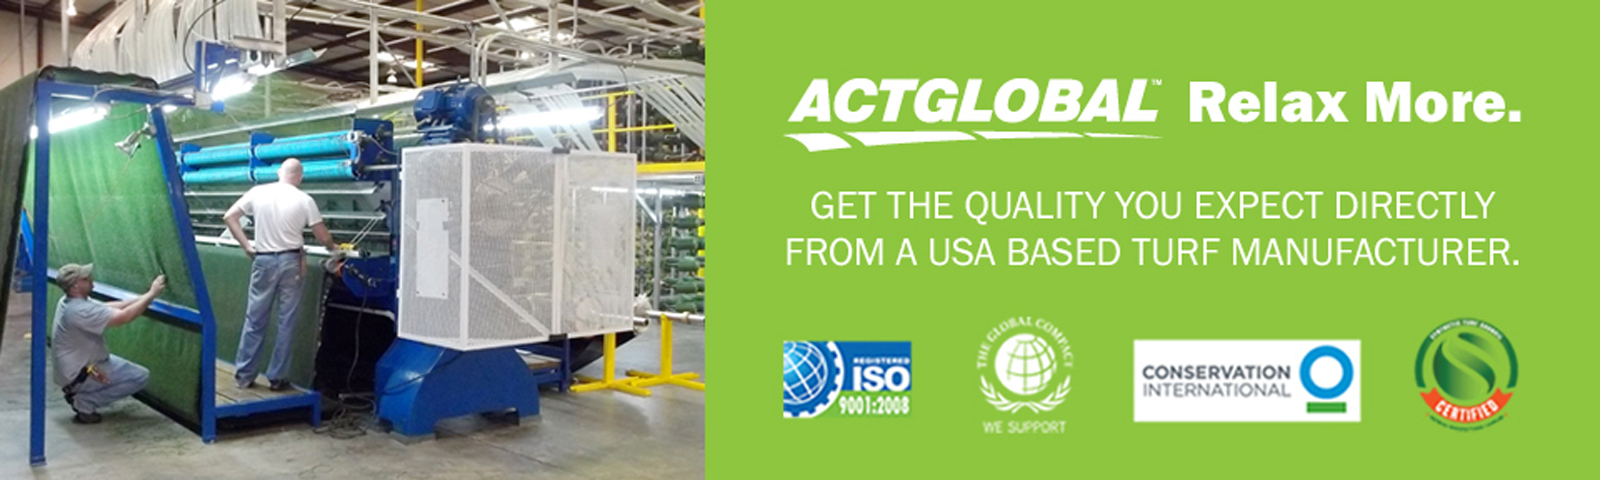 Act Global, artificial turf manufacturer